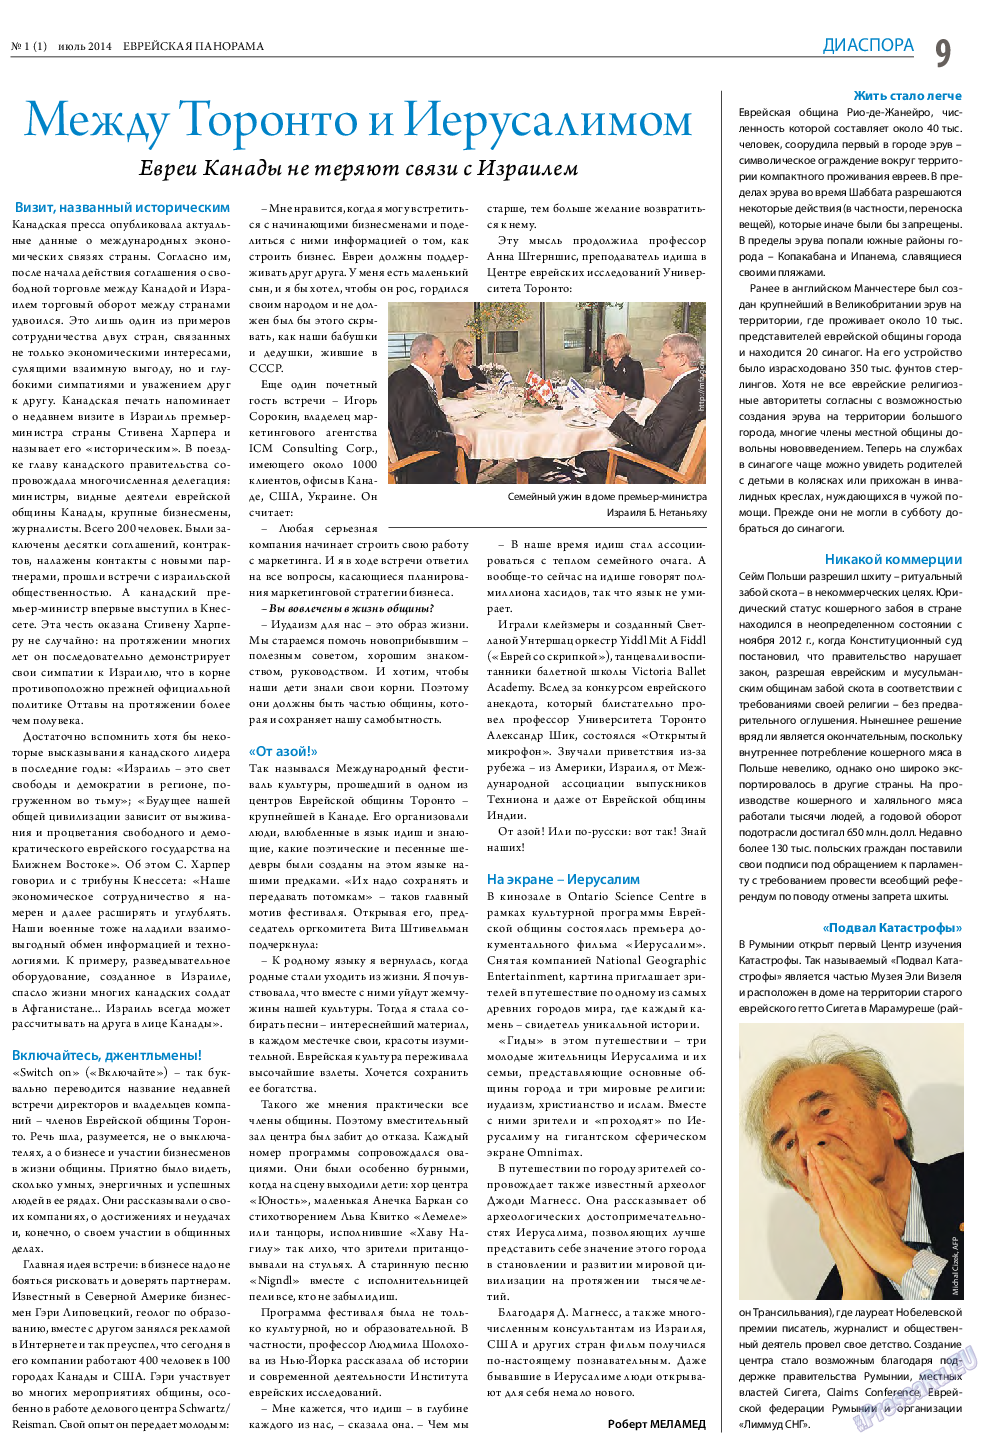 Еврейская панорама, газета. 2014 №1 стр.9